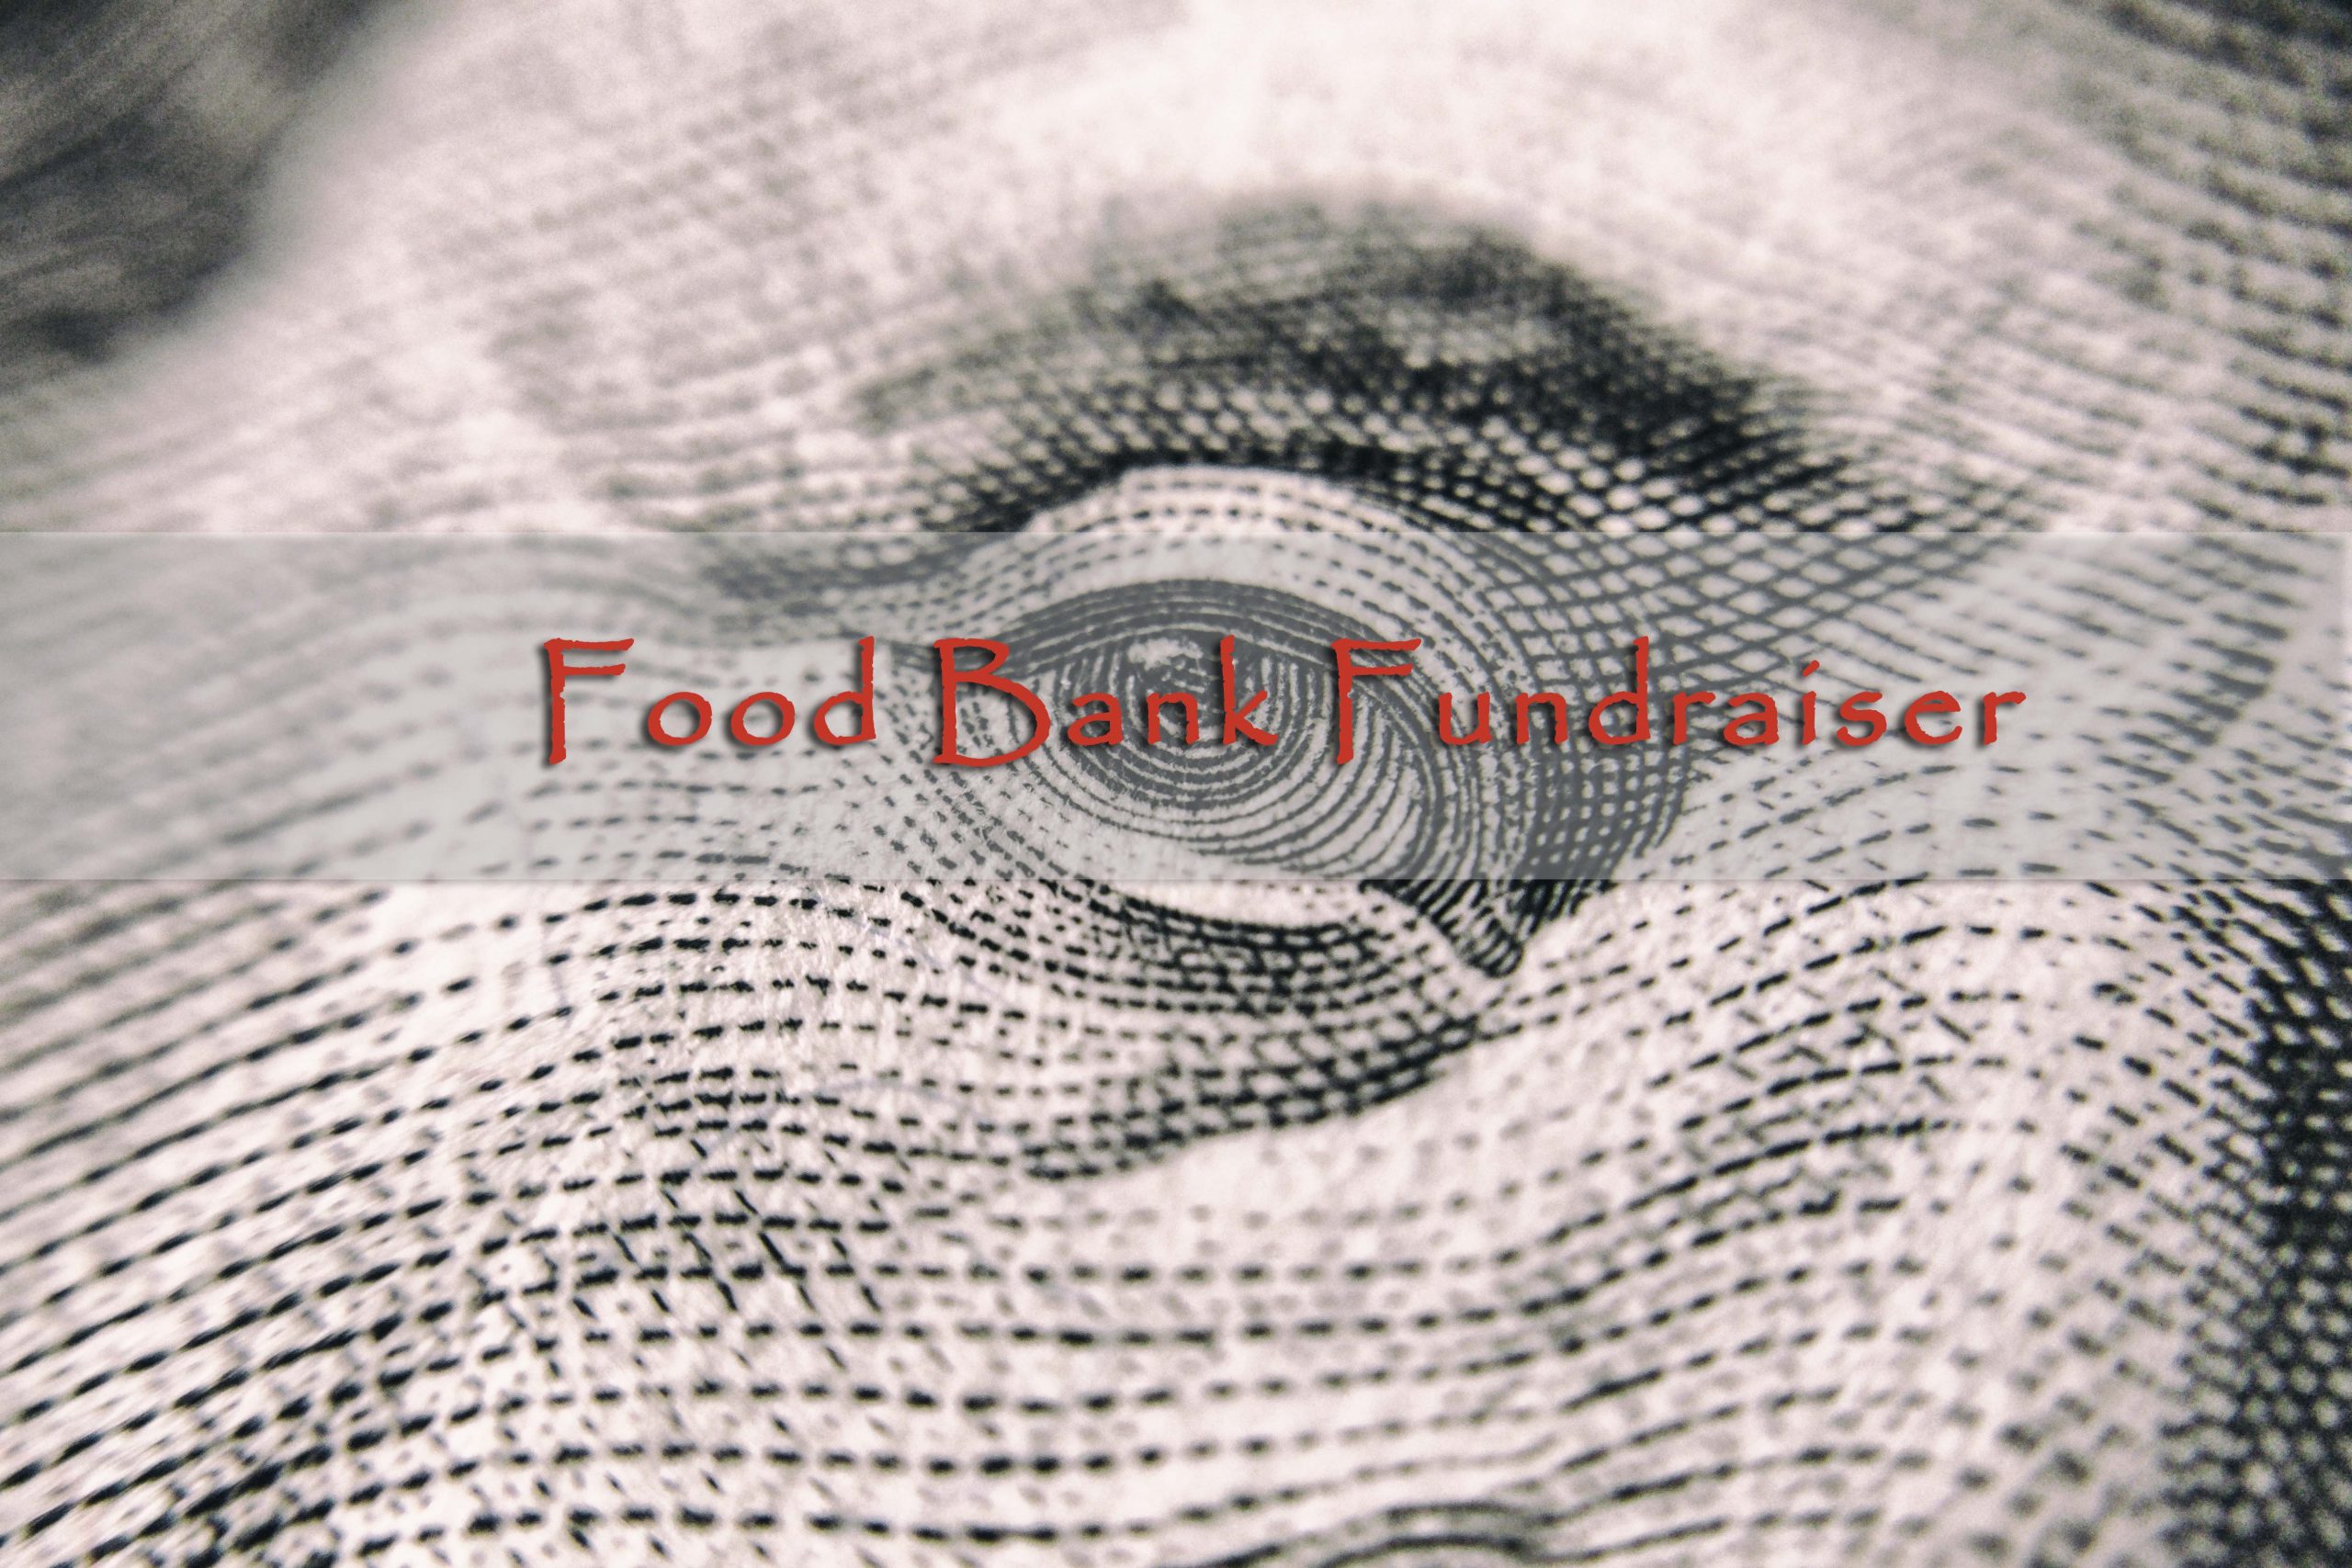 Food Bank Fundraiser